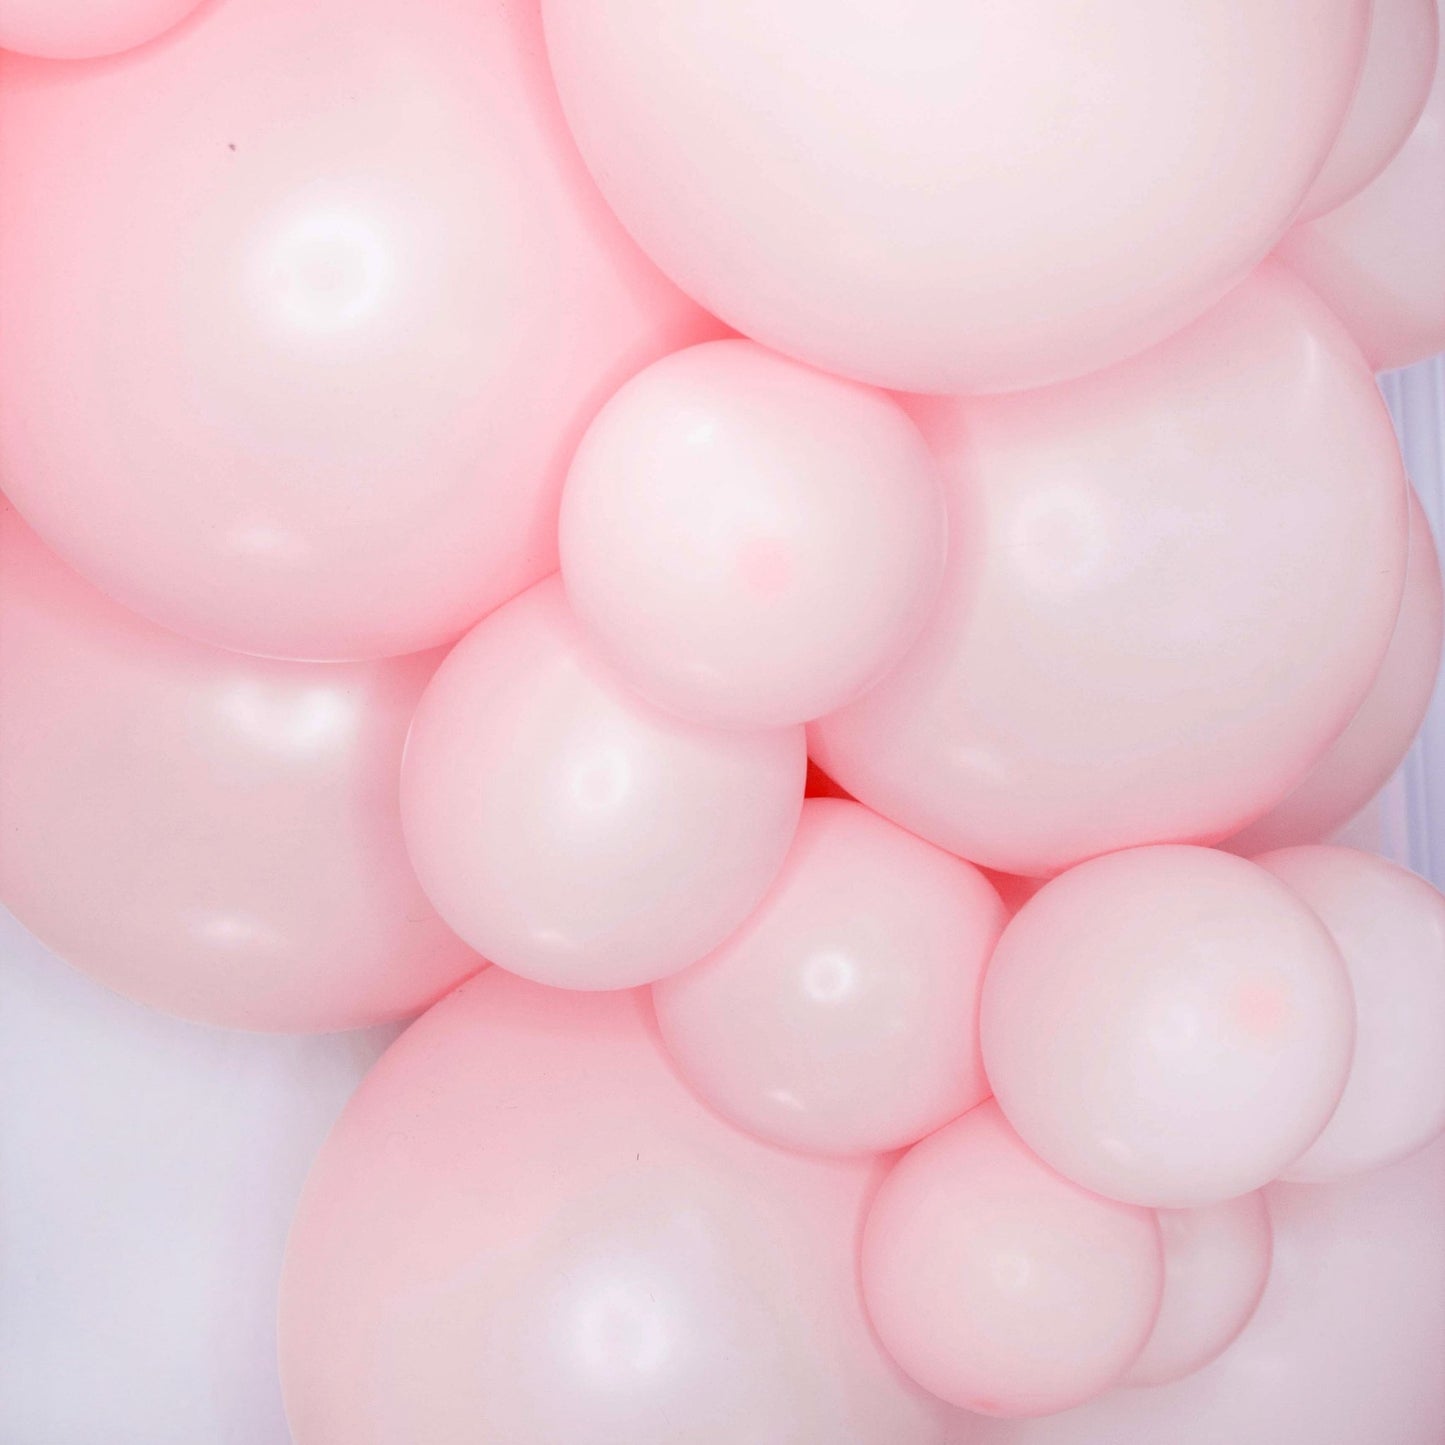 Pink Balloon Garland Kit (5 Feet) - Ellie's Party Supply